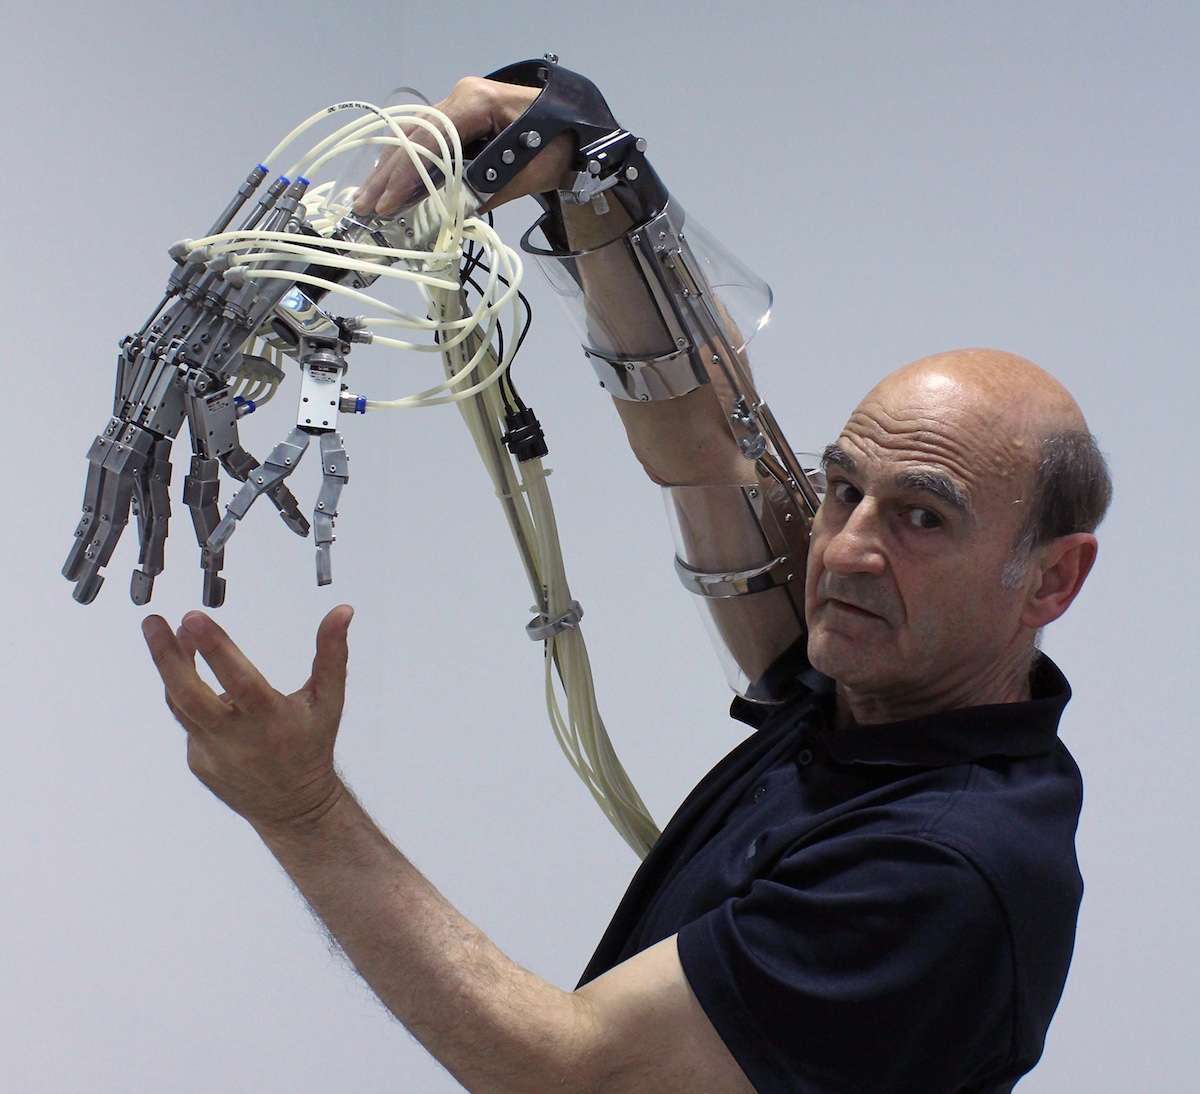 robotics prosthetics improvement body functions performance control physical